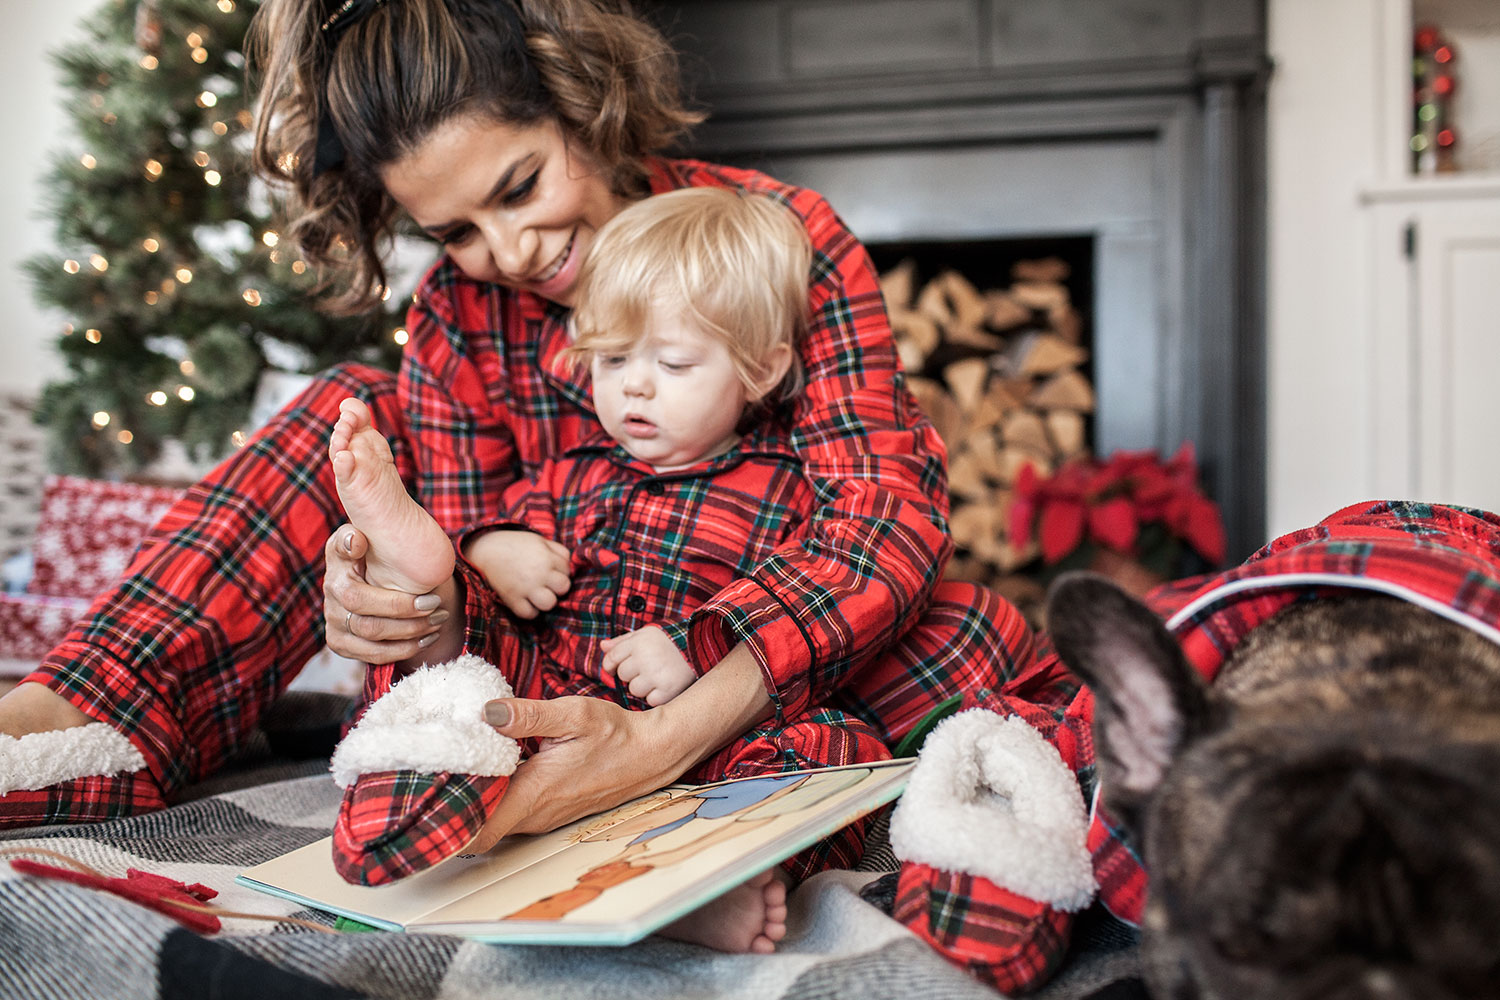 Target holiday plaid family pajamas, family time